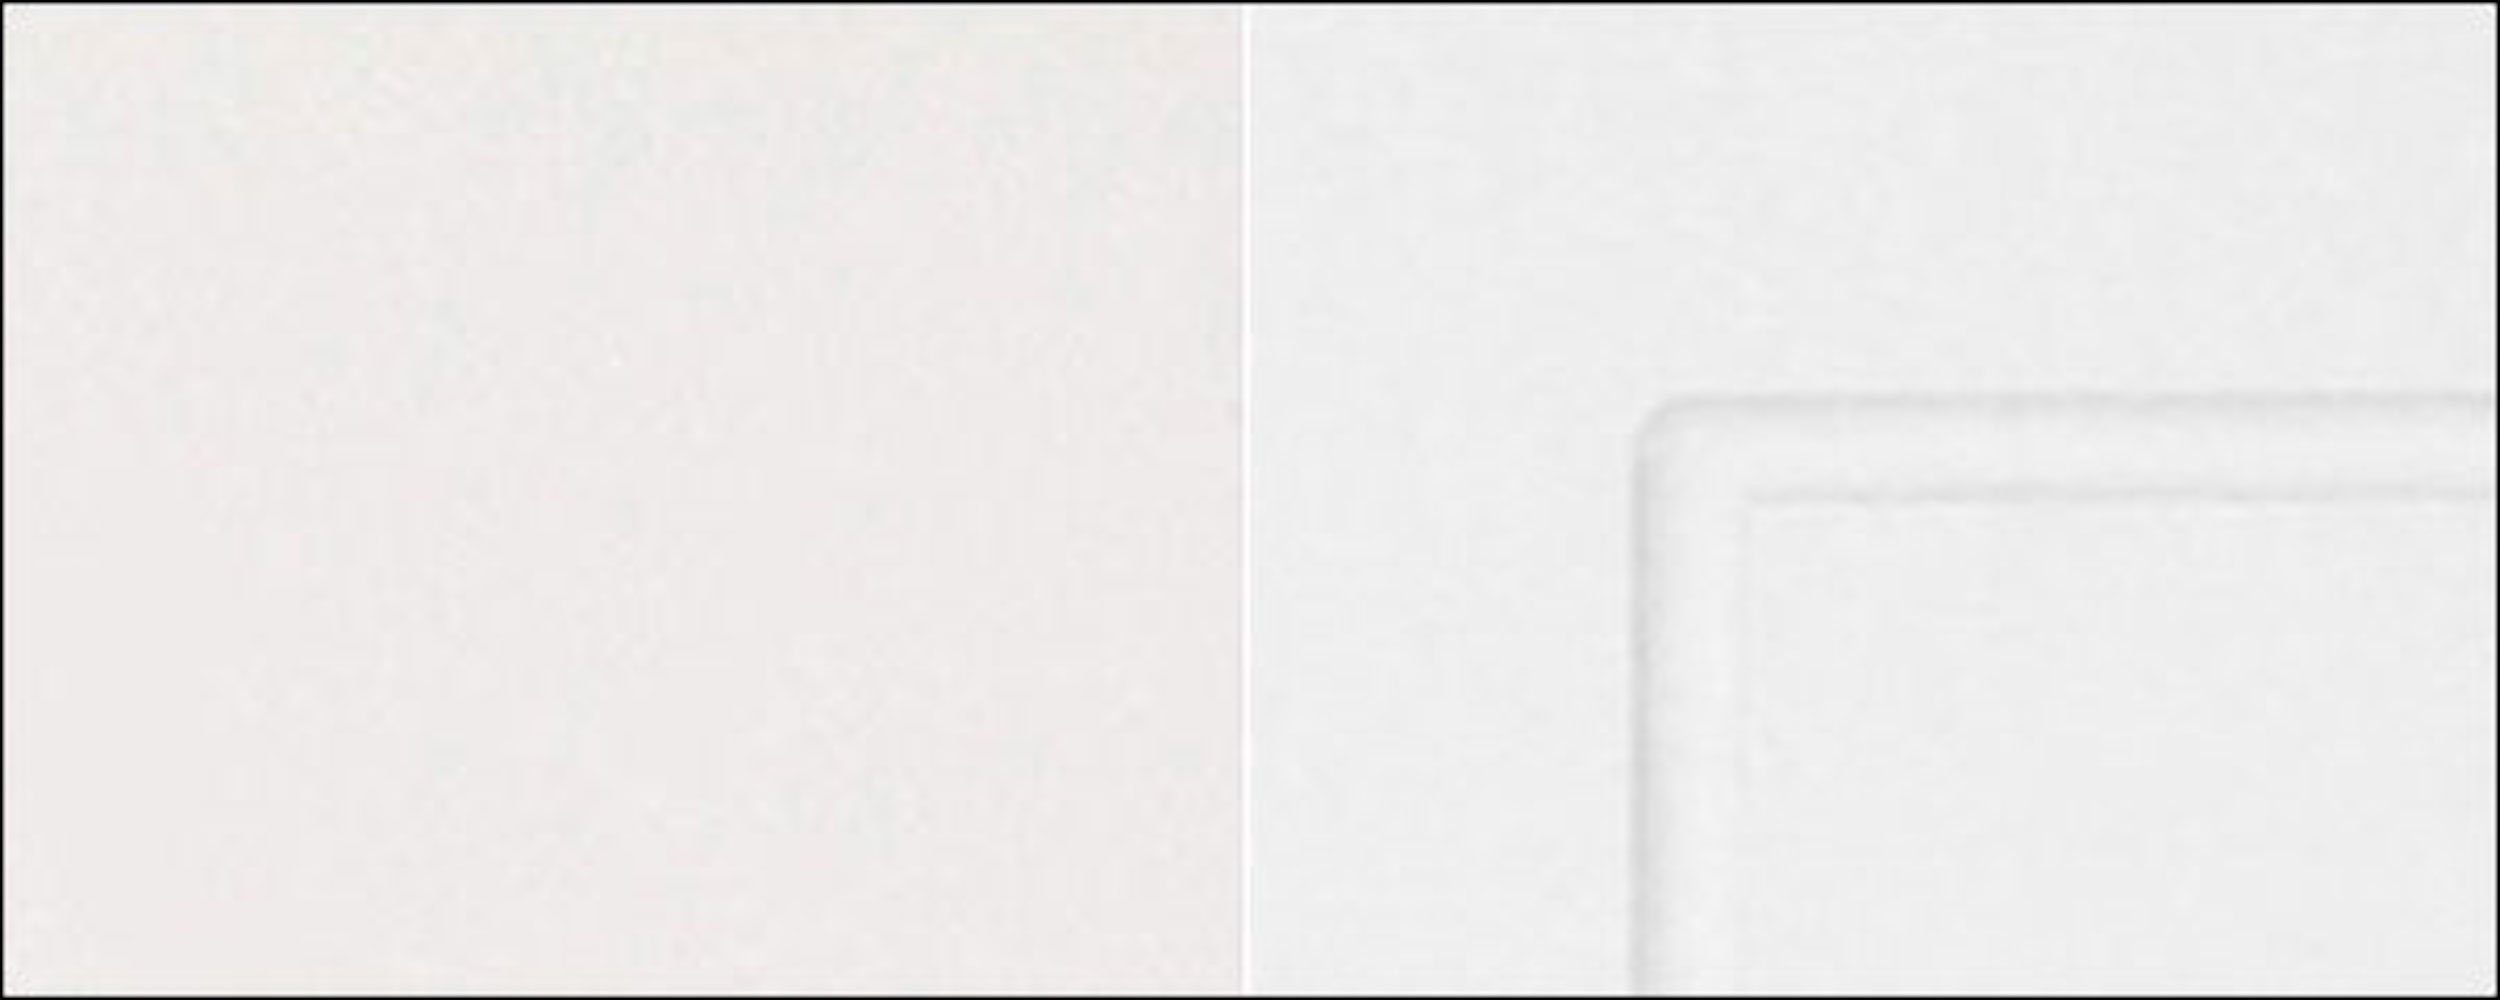 Front- Feldmann-Wohnen wählbar und matt Korpusfarbe weiß 30cm (Kvantum) Kvantum 1-türig Klapphängeschrank